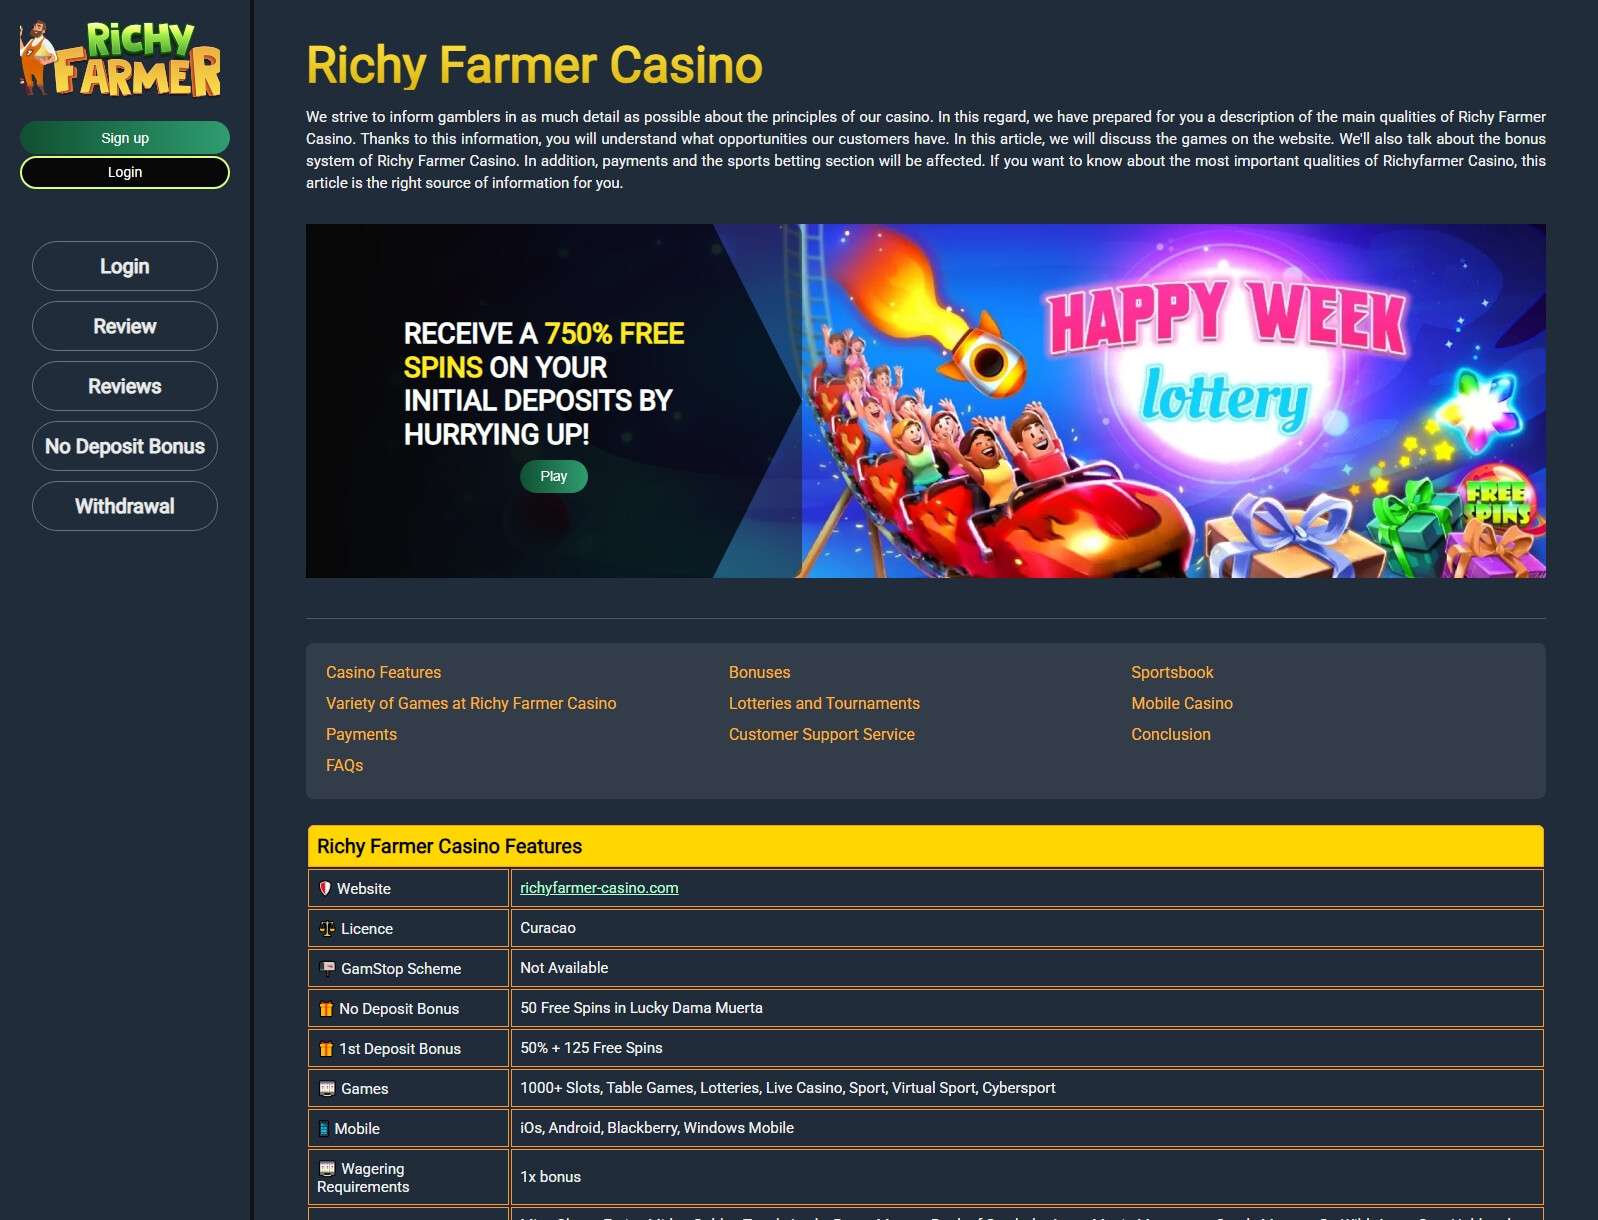 Tournaments at Richy Farmer Casino